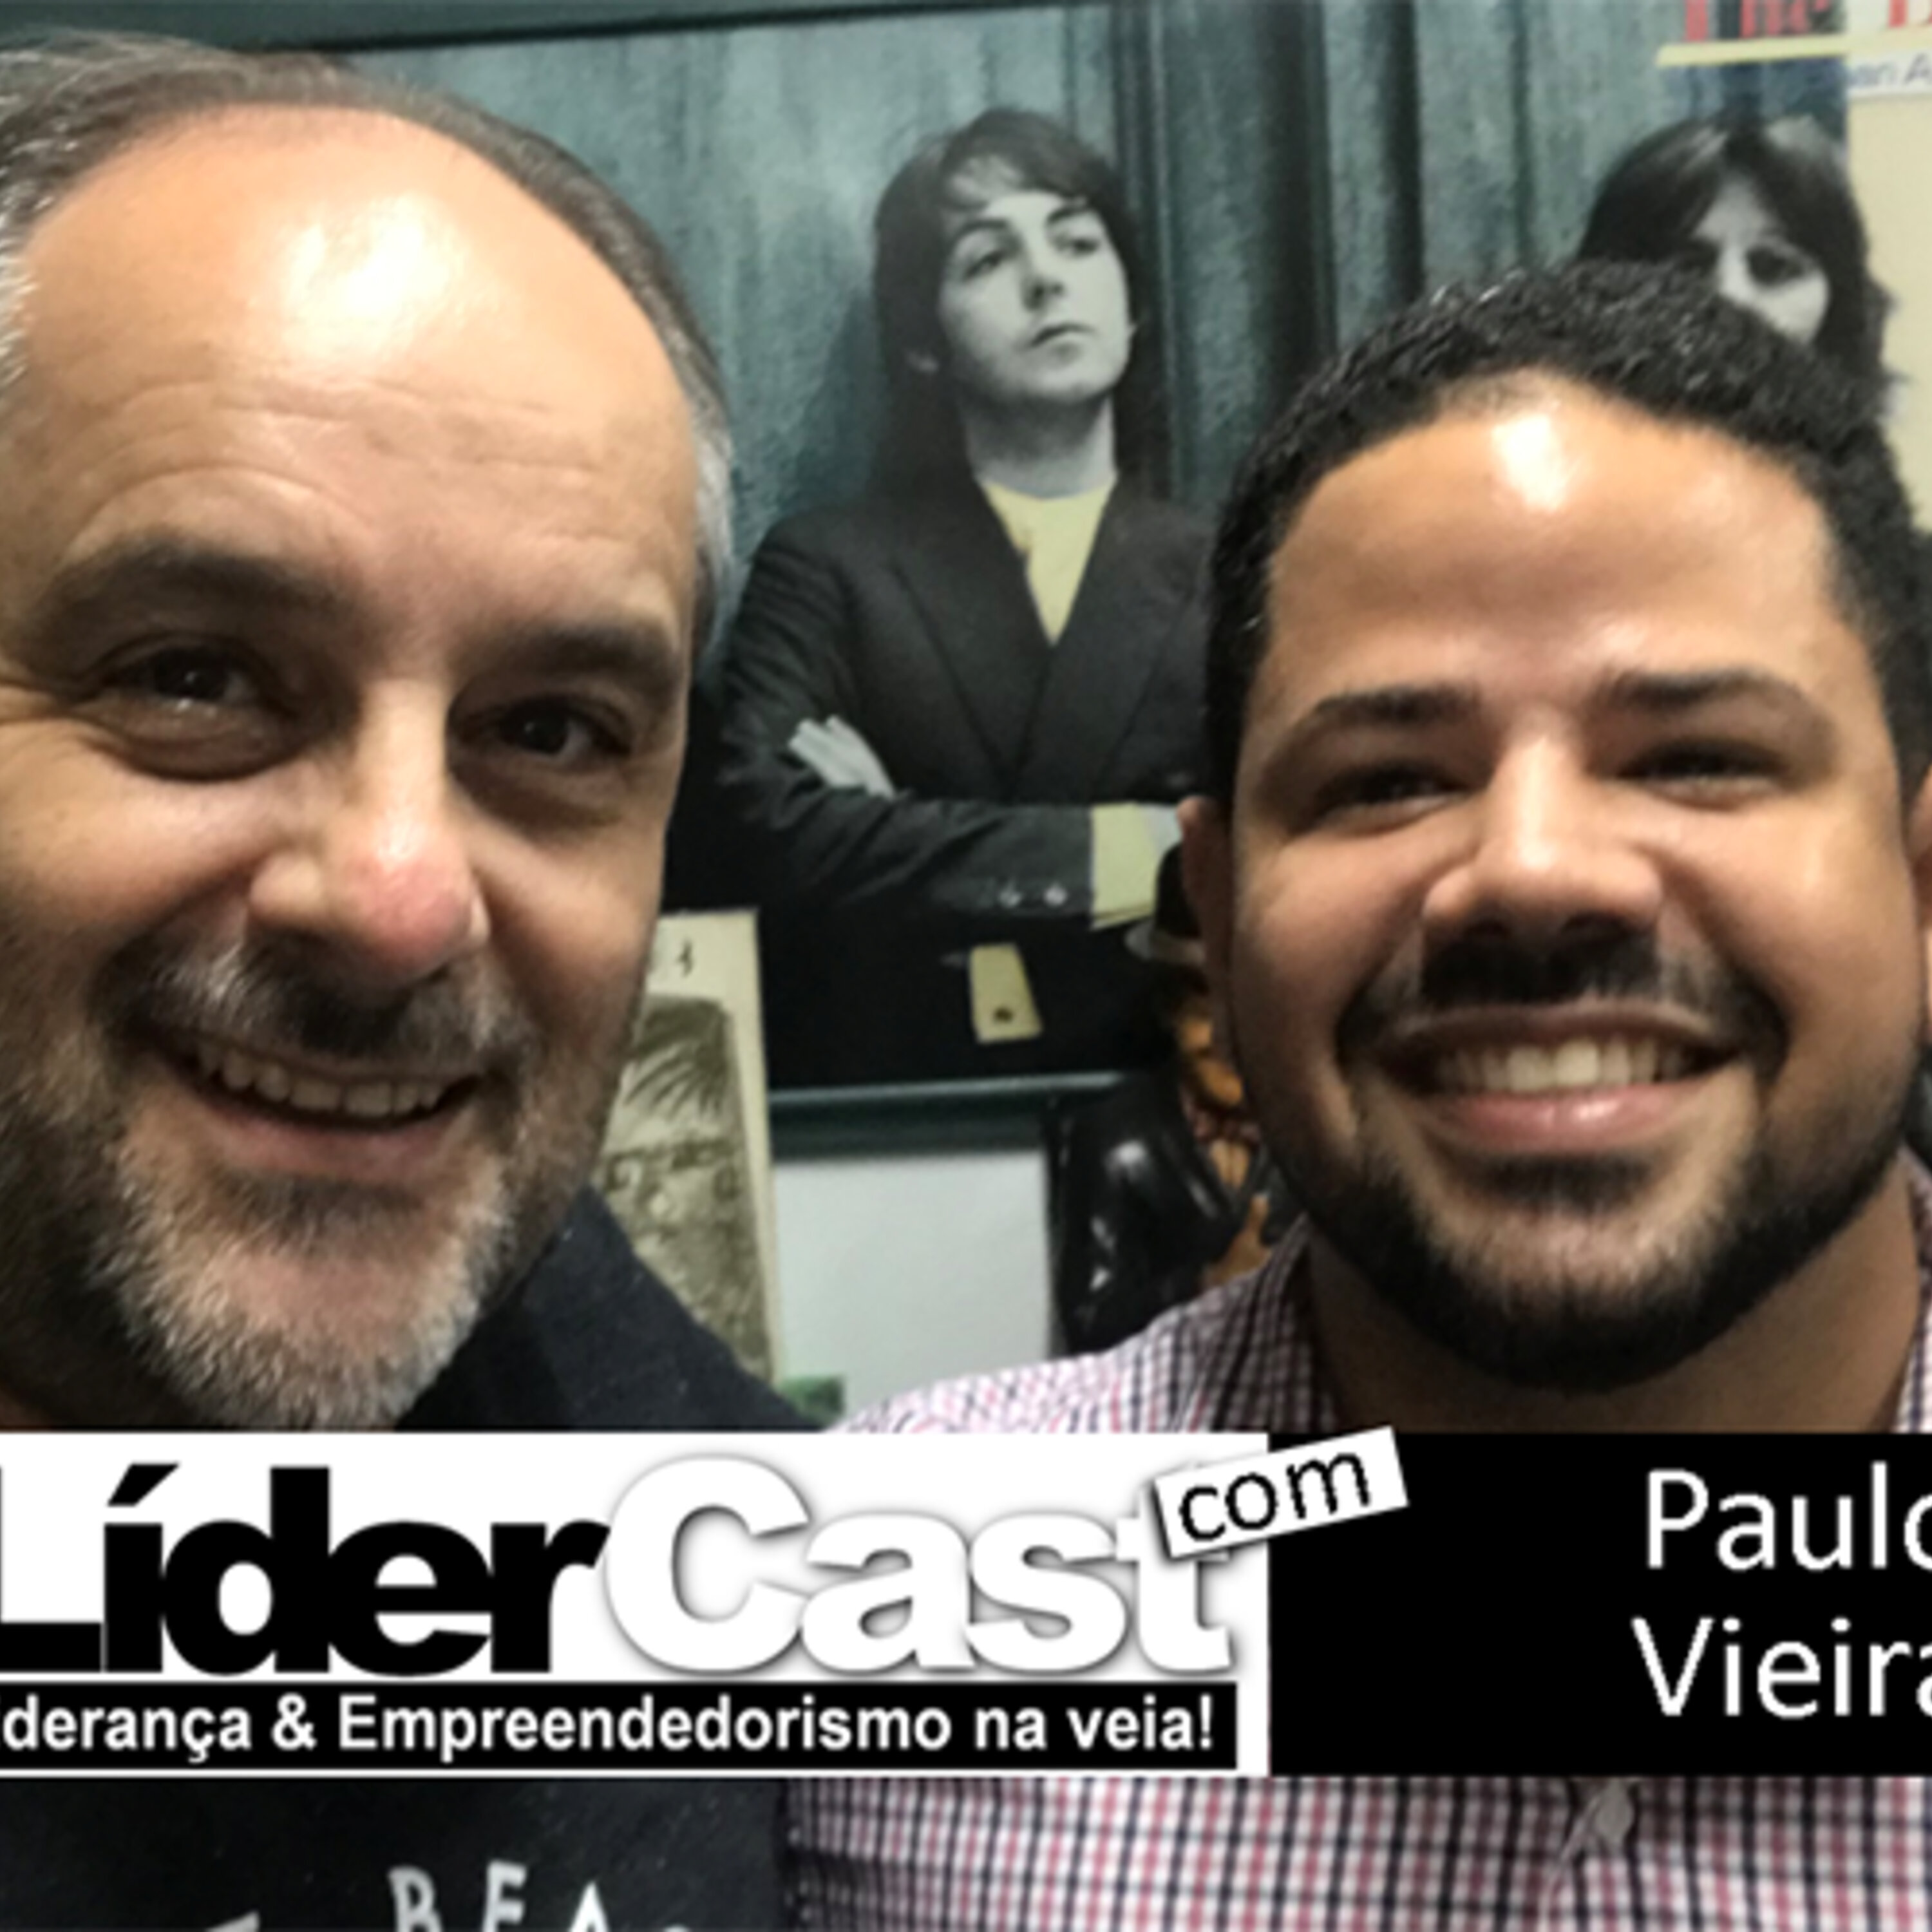 LíderCast 172 – Paulo Vieira